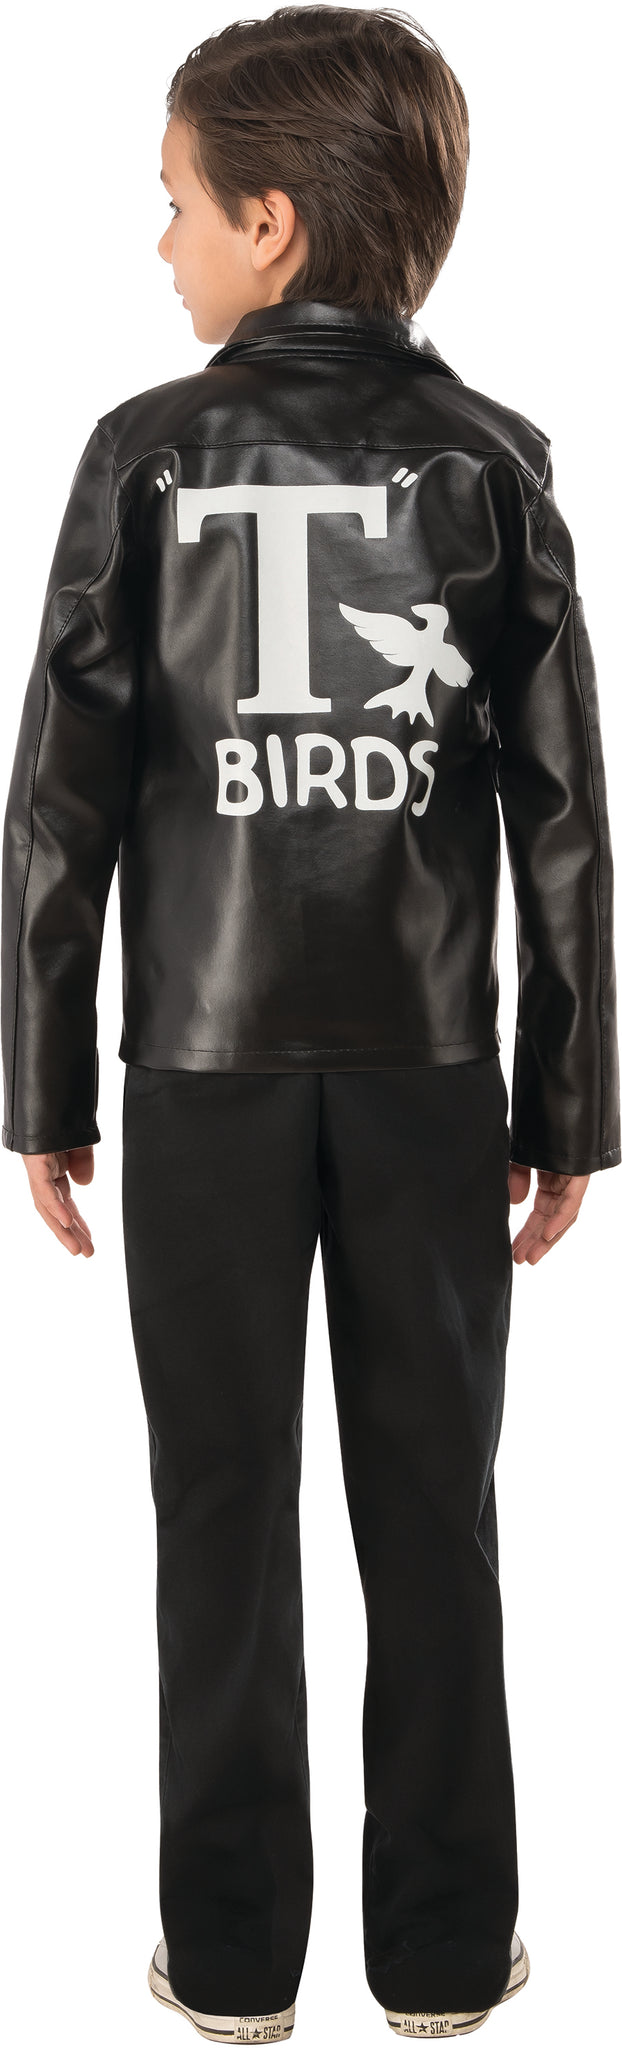 T-Birds Jacket | Child